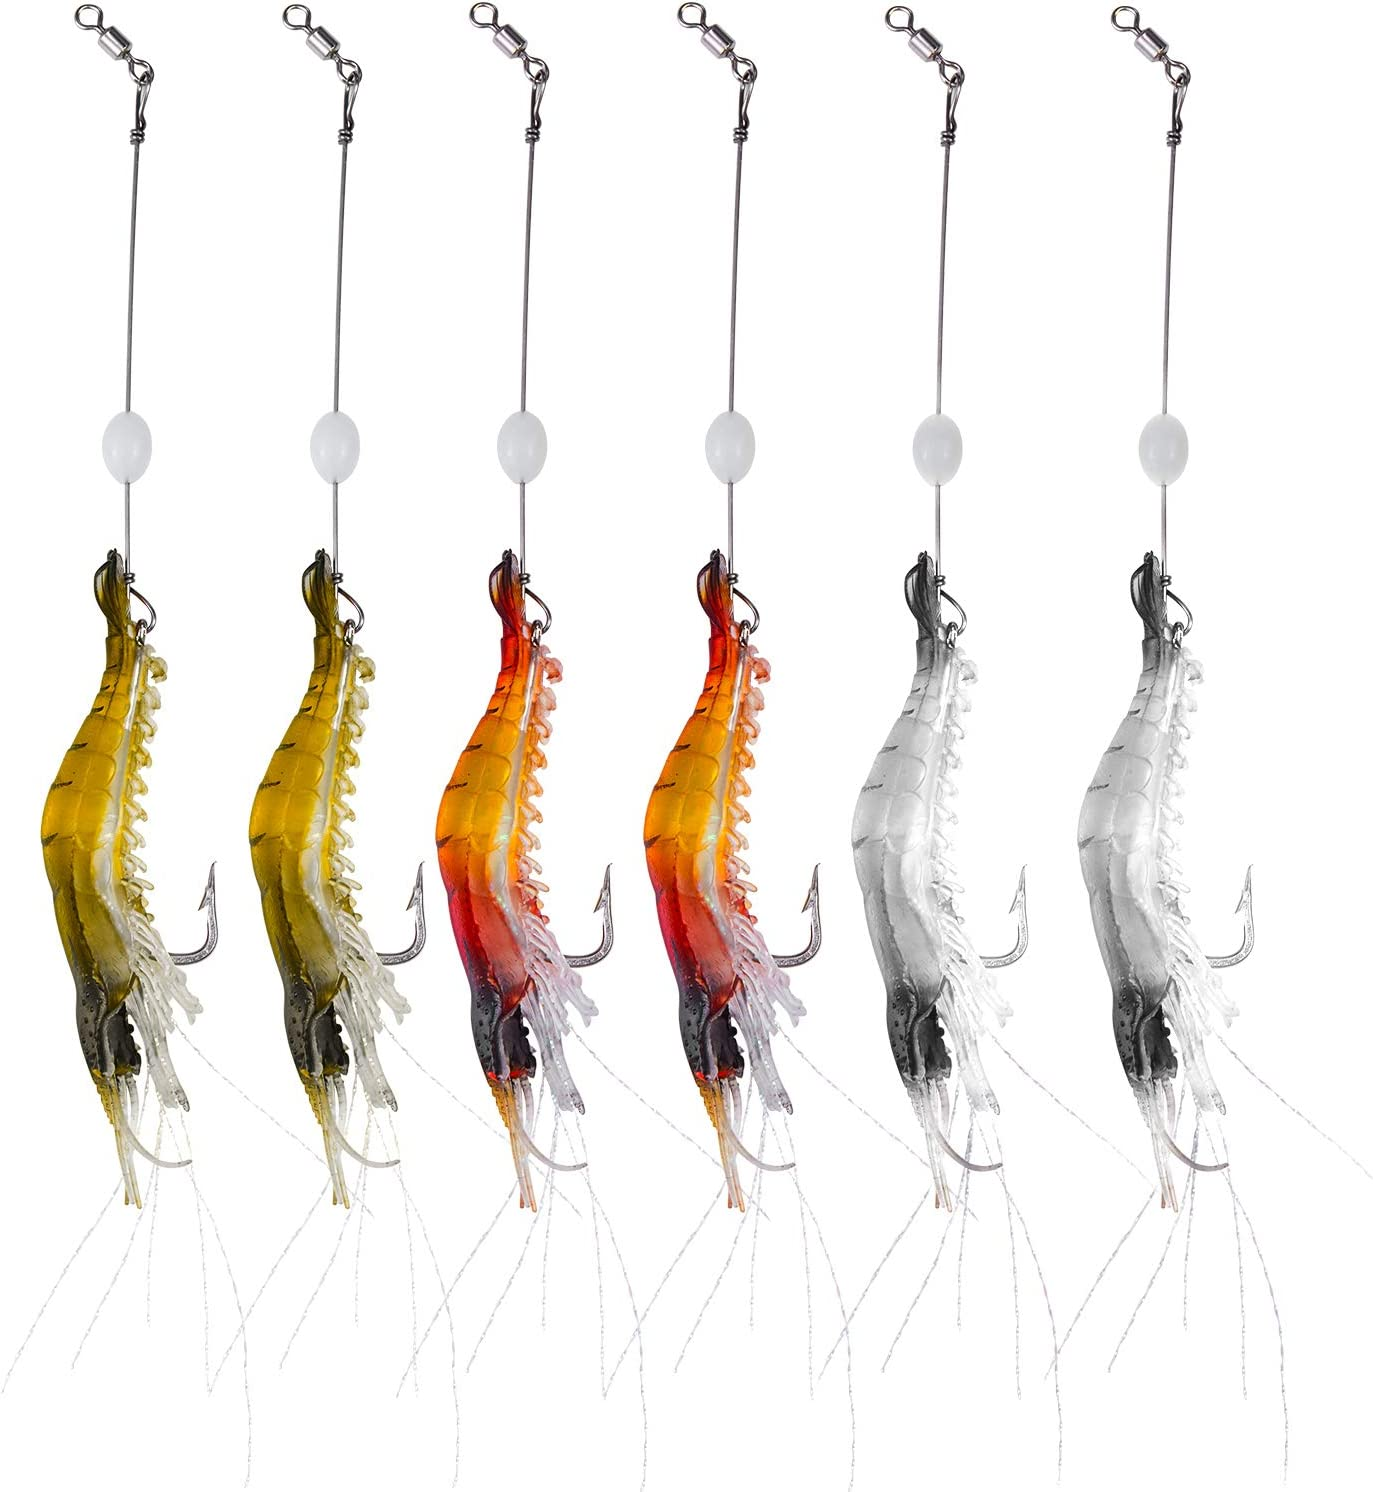 WANBY Fishing Shrimp Lures Artificial Silicone Soft Bait Set